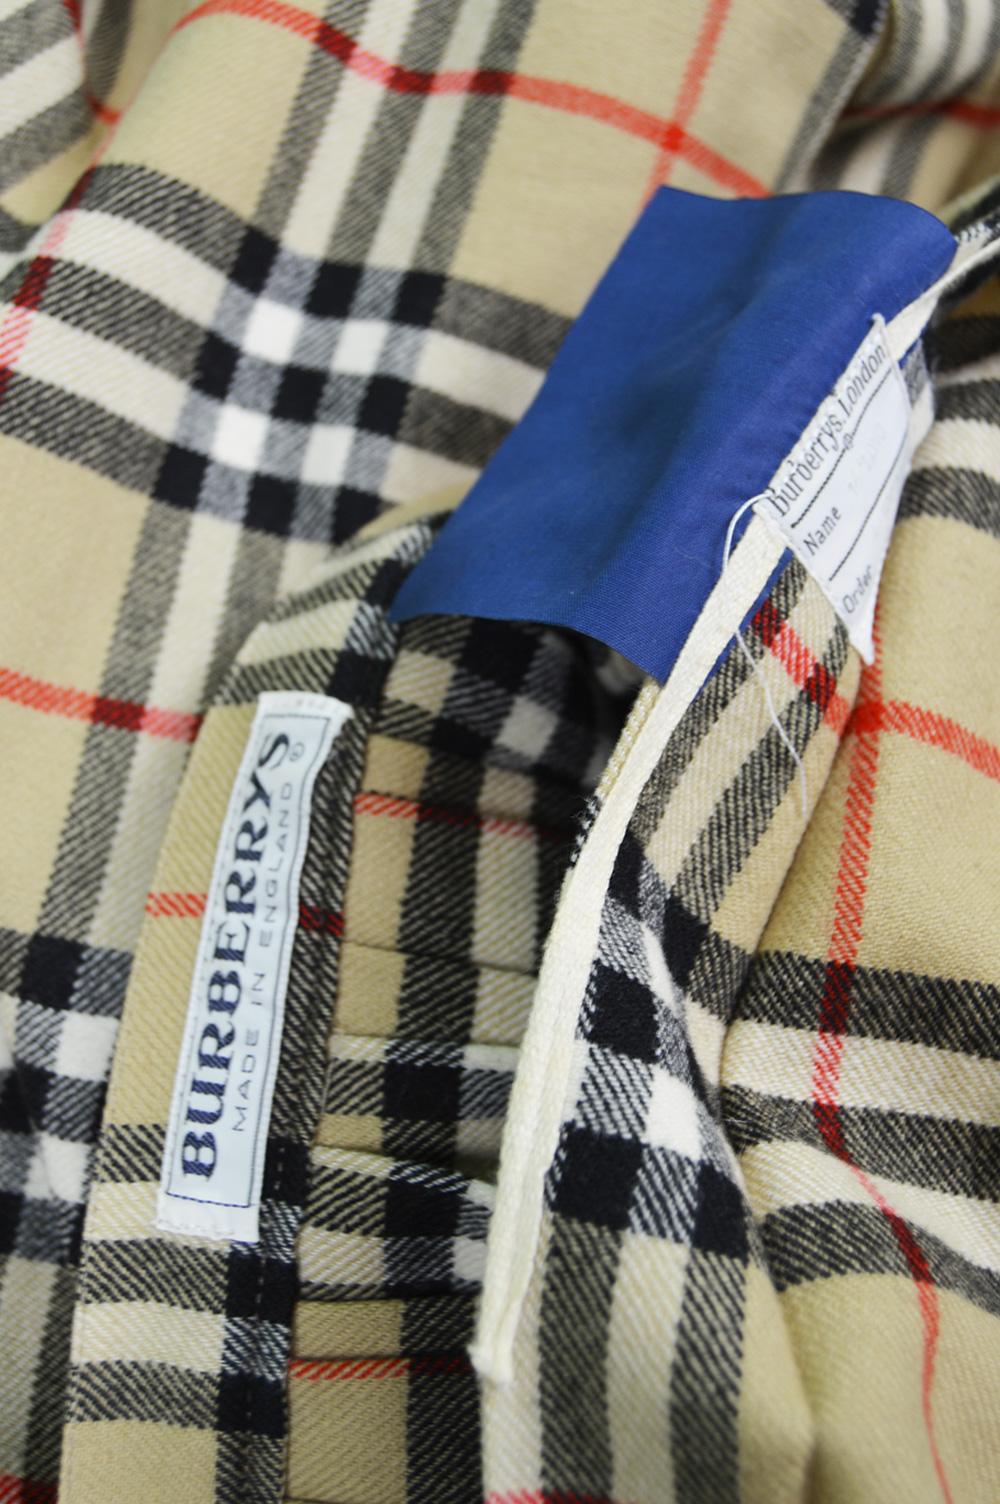 Burberry Vintage Women's 100% Wool Nova Check Tartan Kilt Skirt, 1980s ...